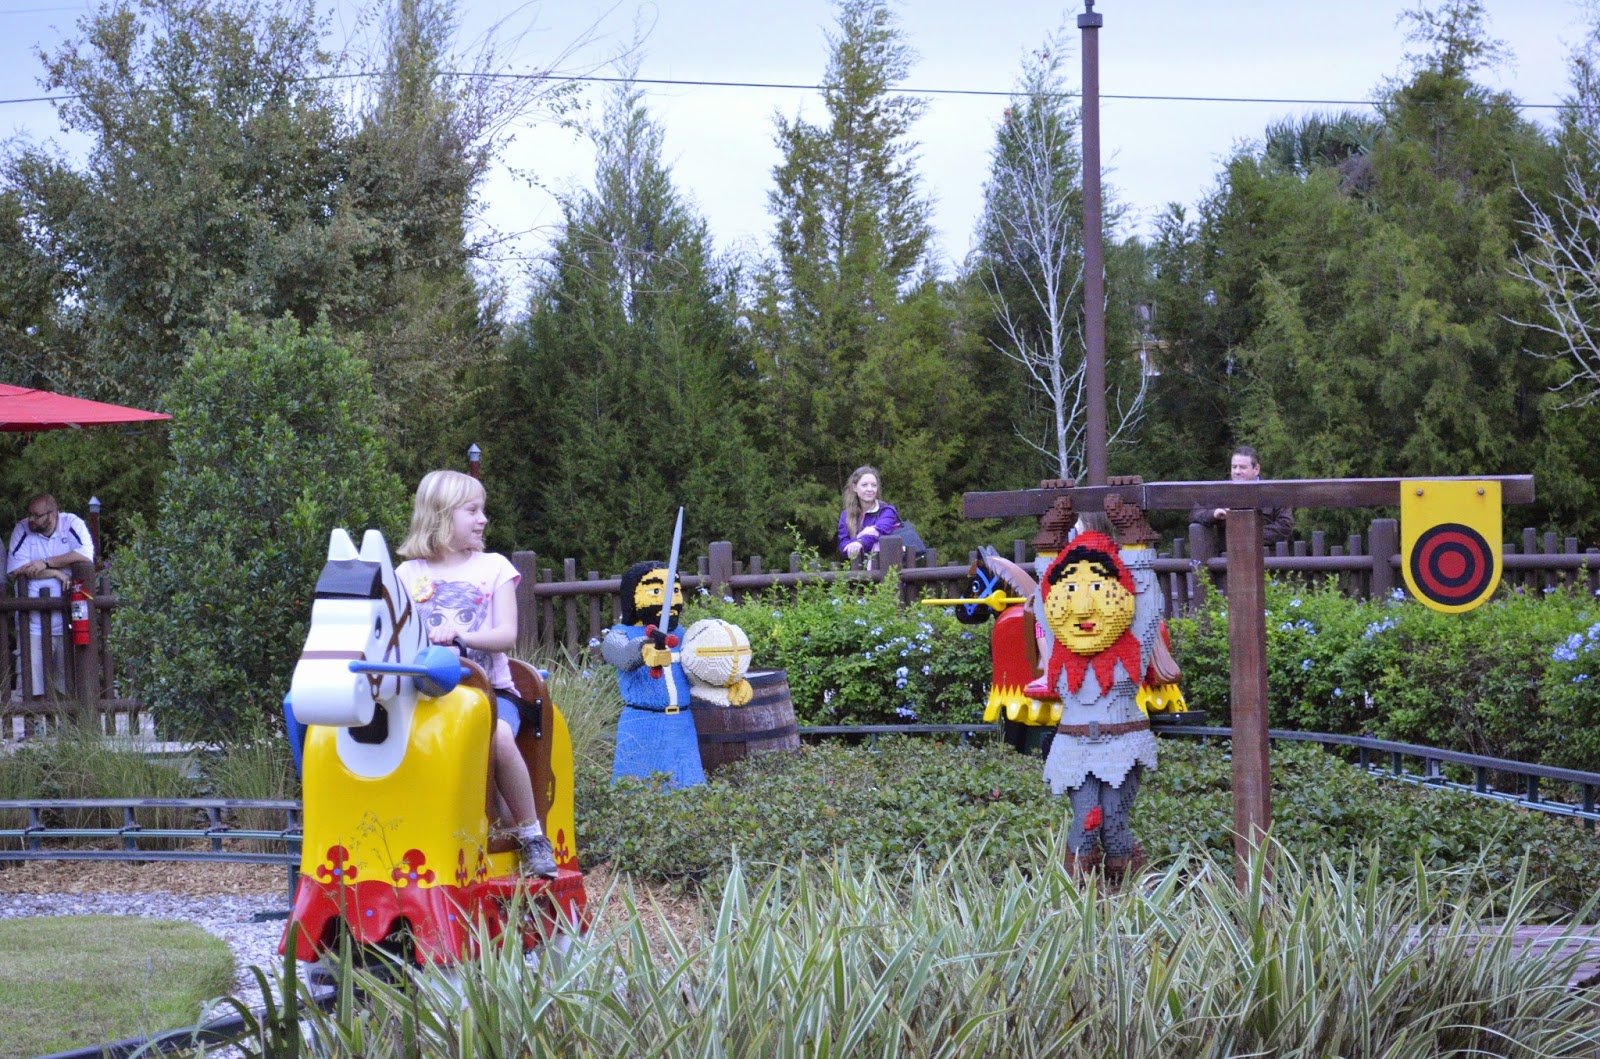 Off season is the best time to visit Legoland! #travel #legoland